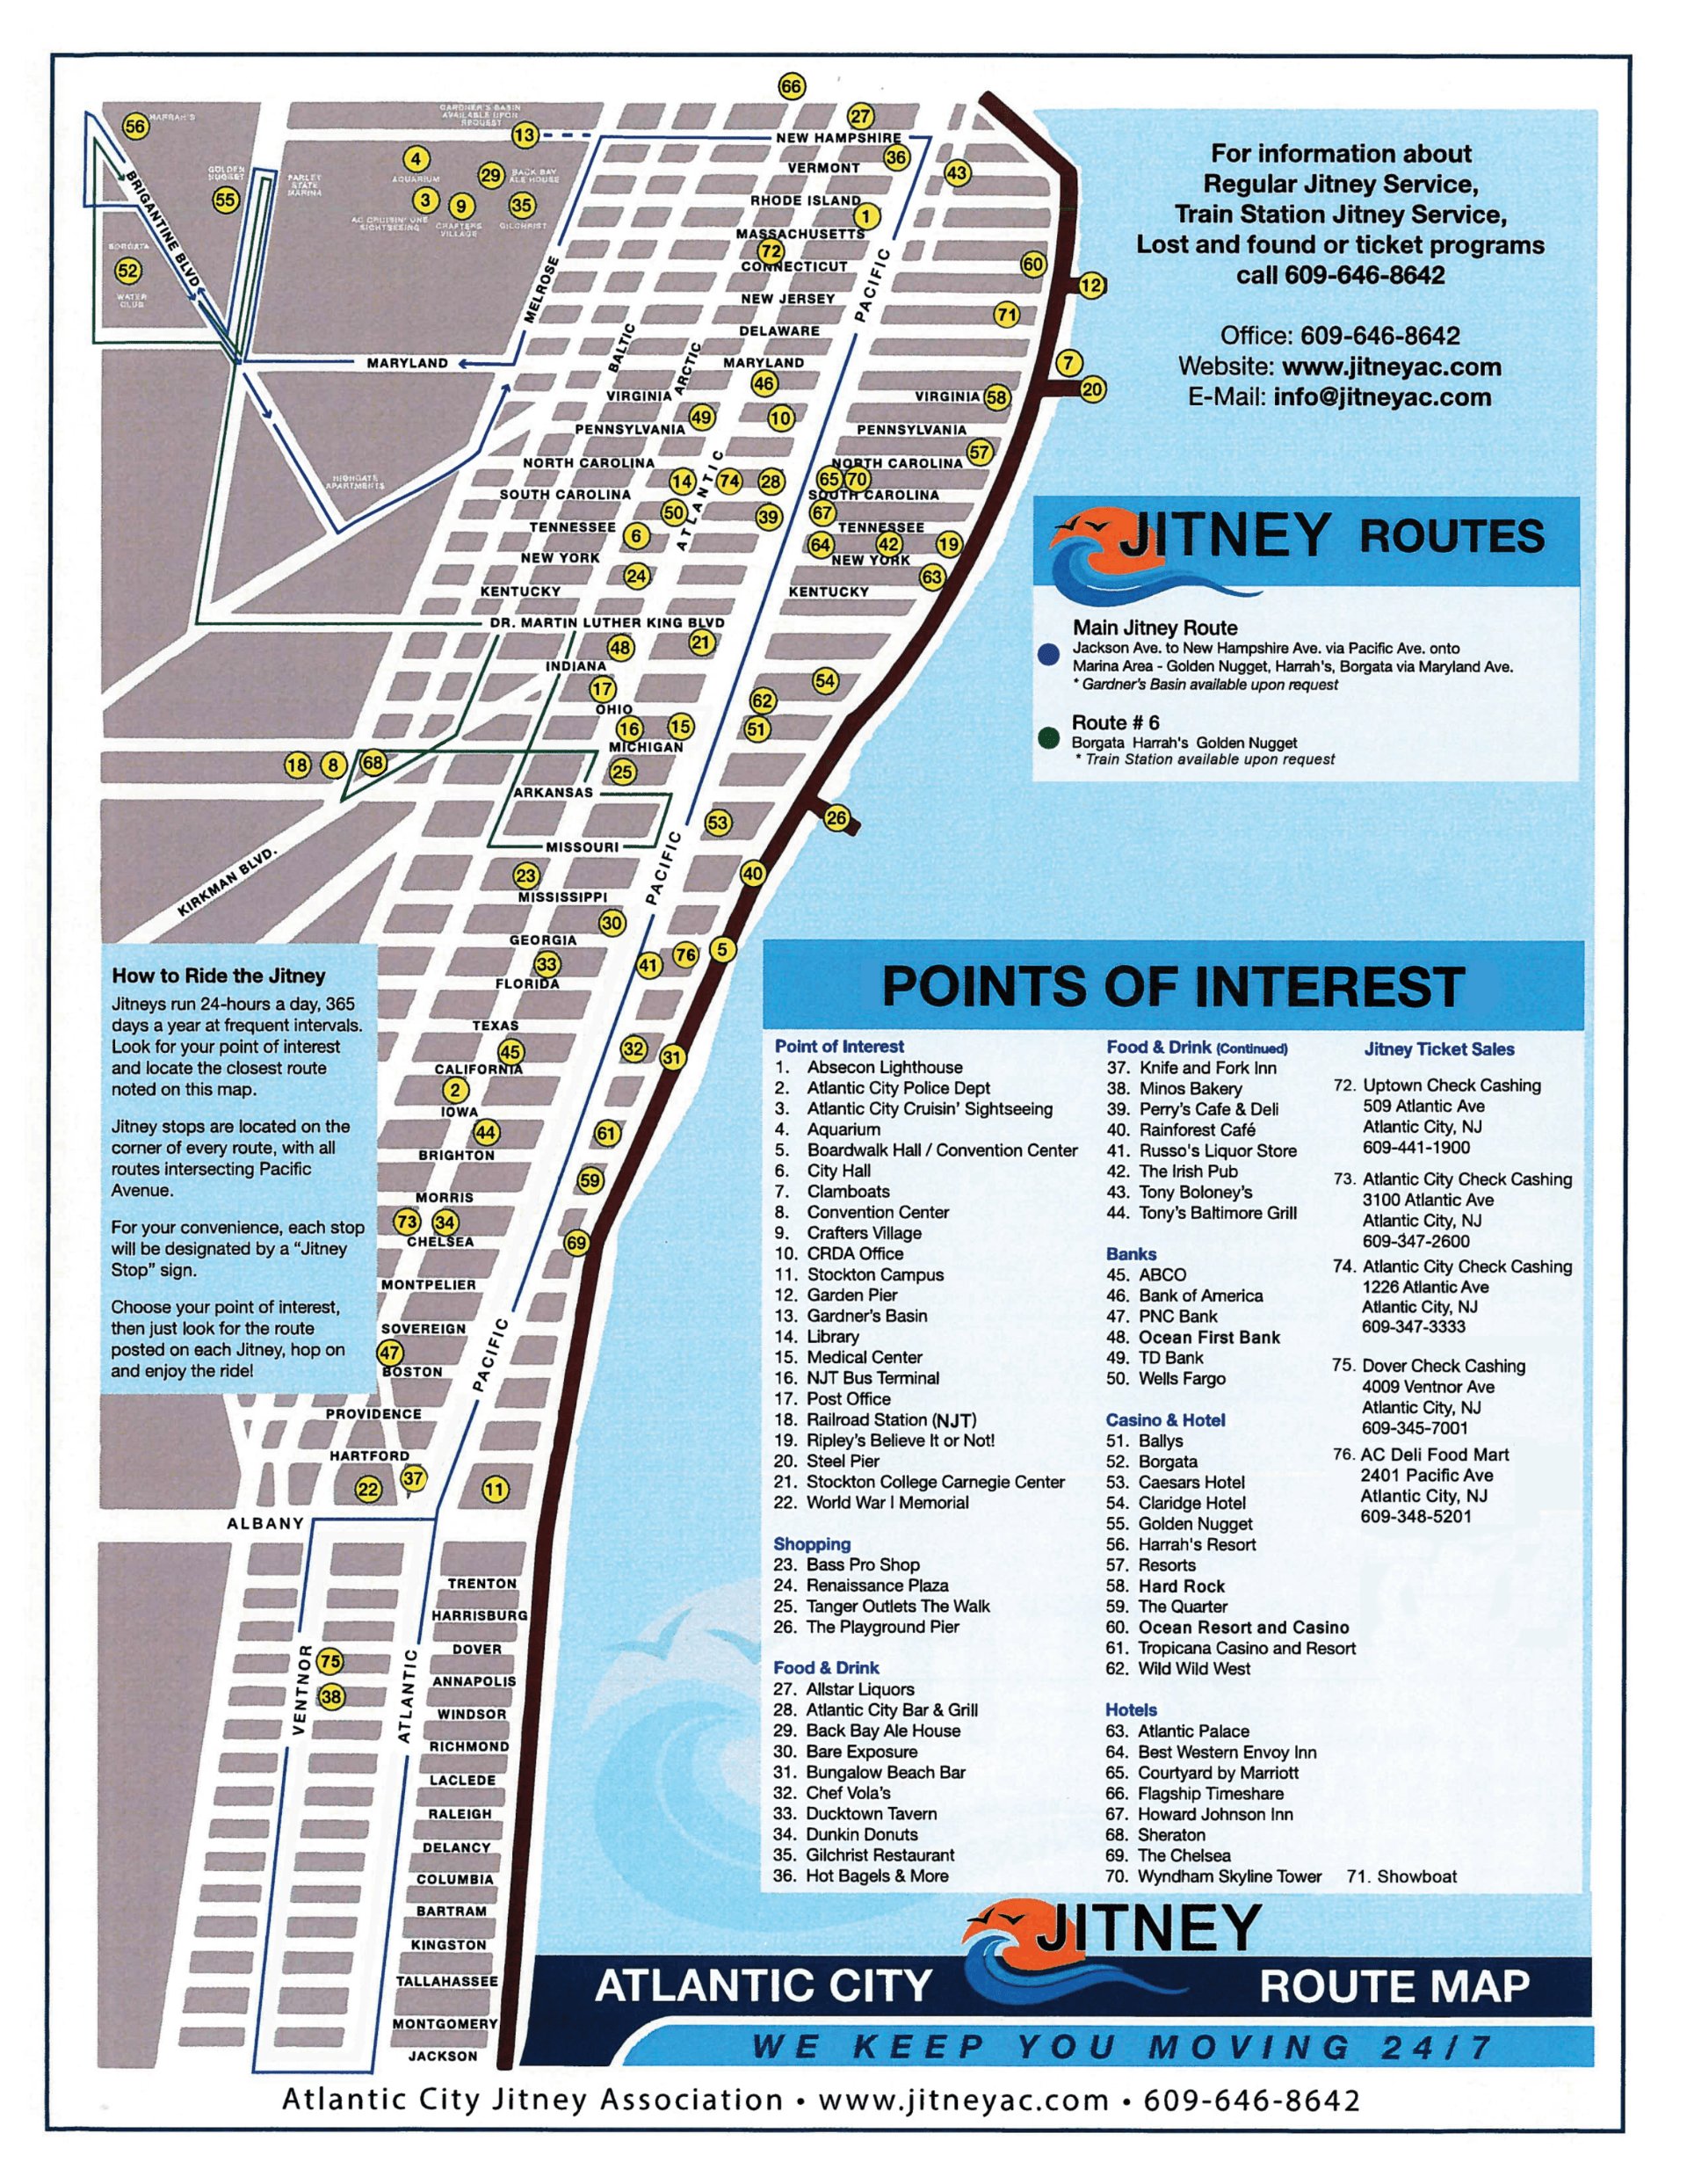 Atlantic City Routes Map
